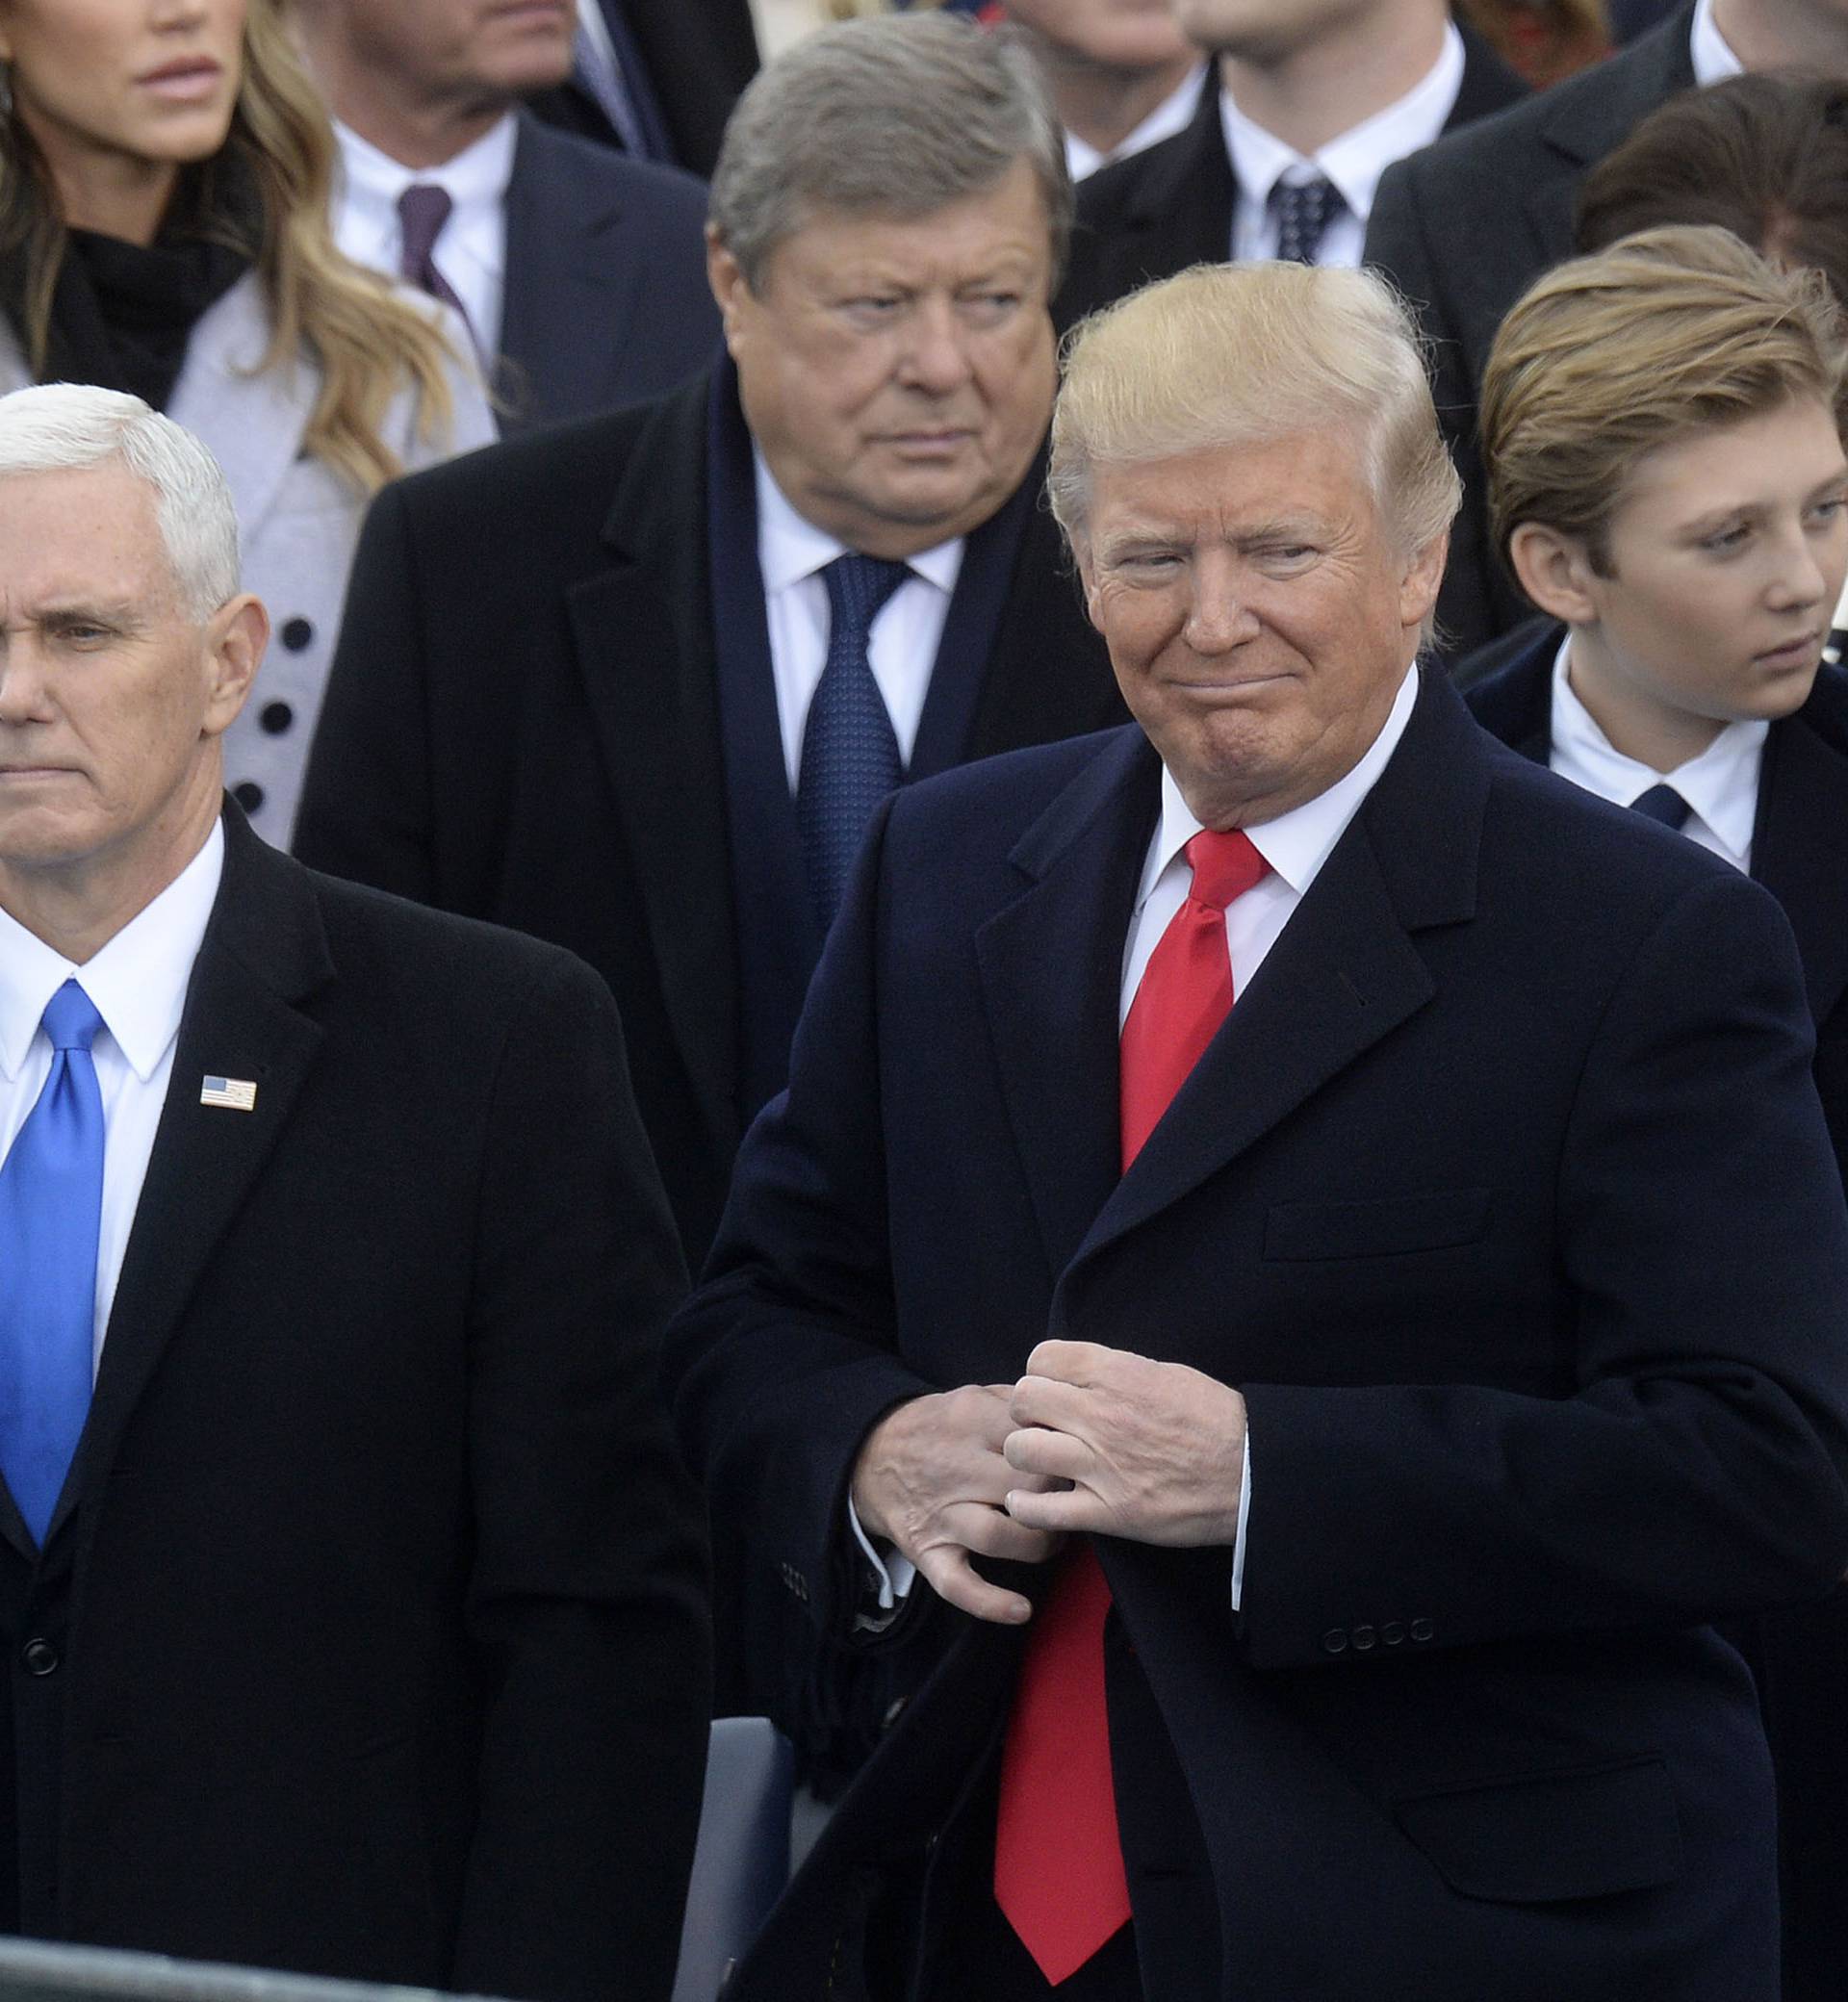 Donald Trump Sworn In As U.S. President  - DC